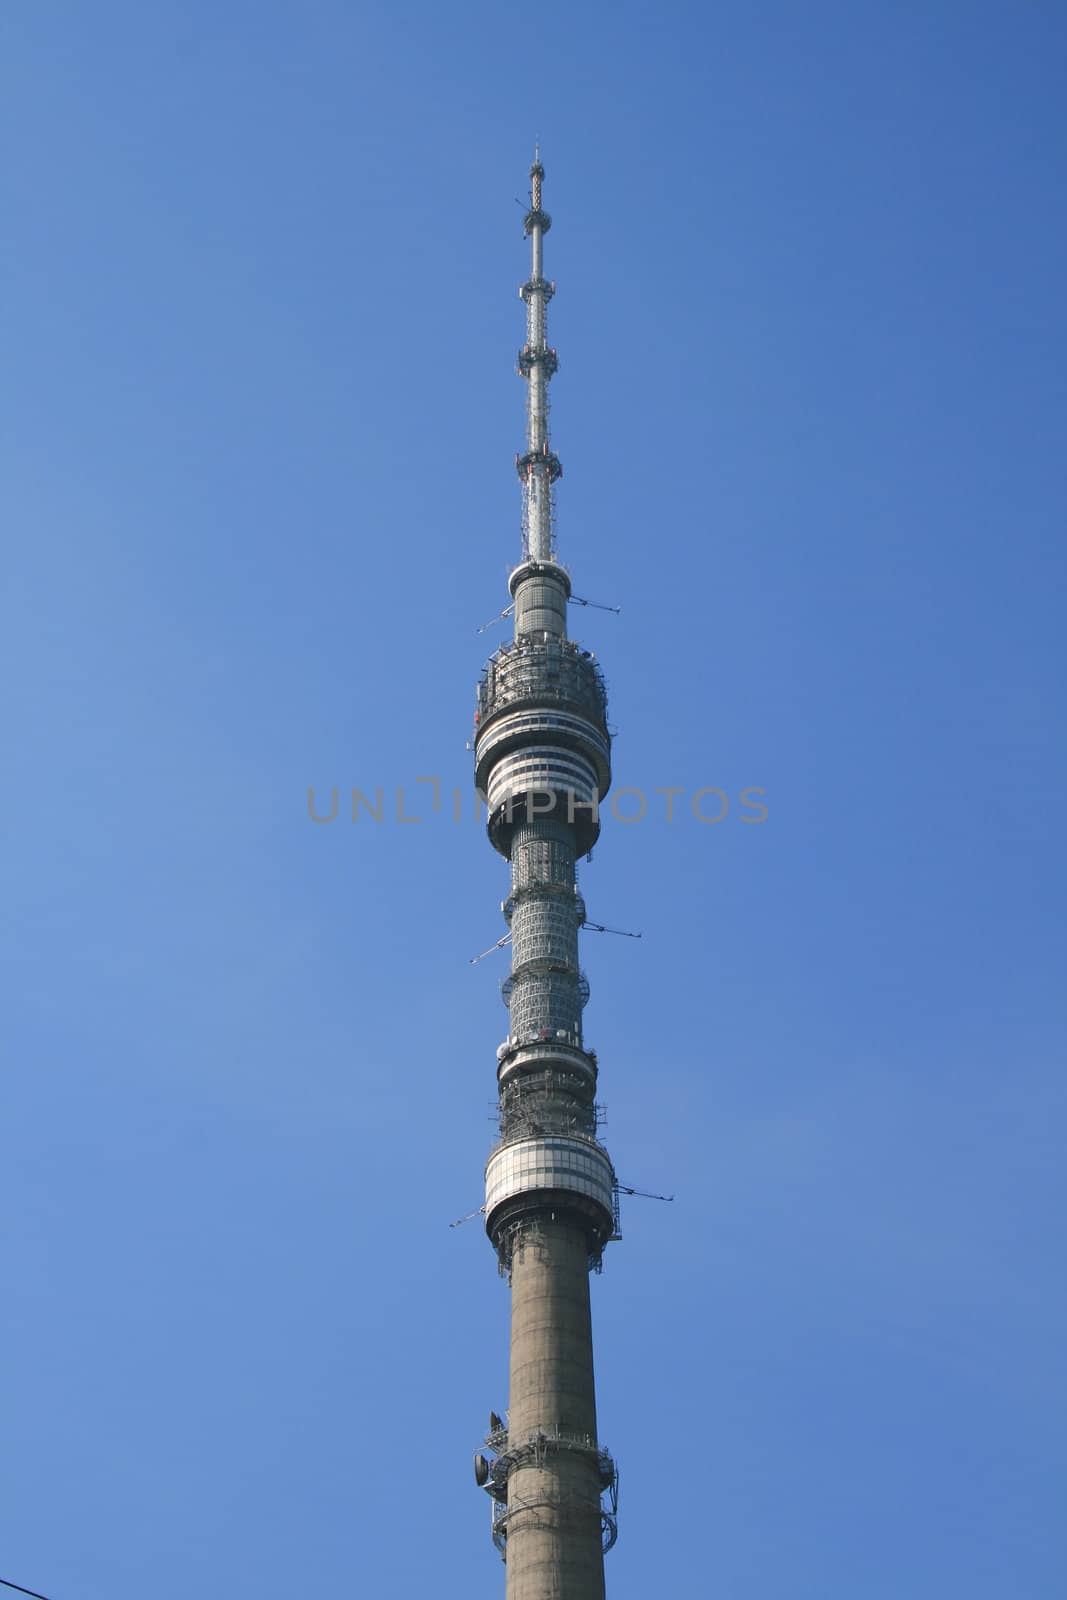 Ostankino tower by Vof